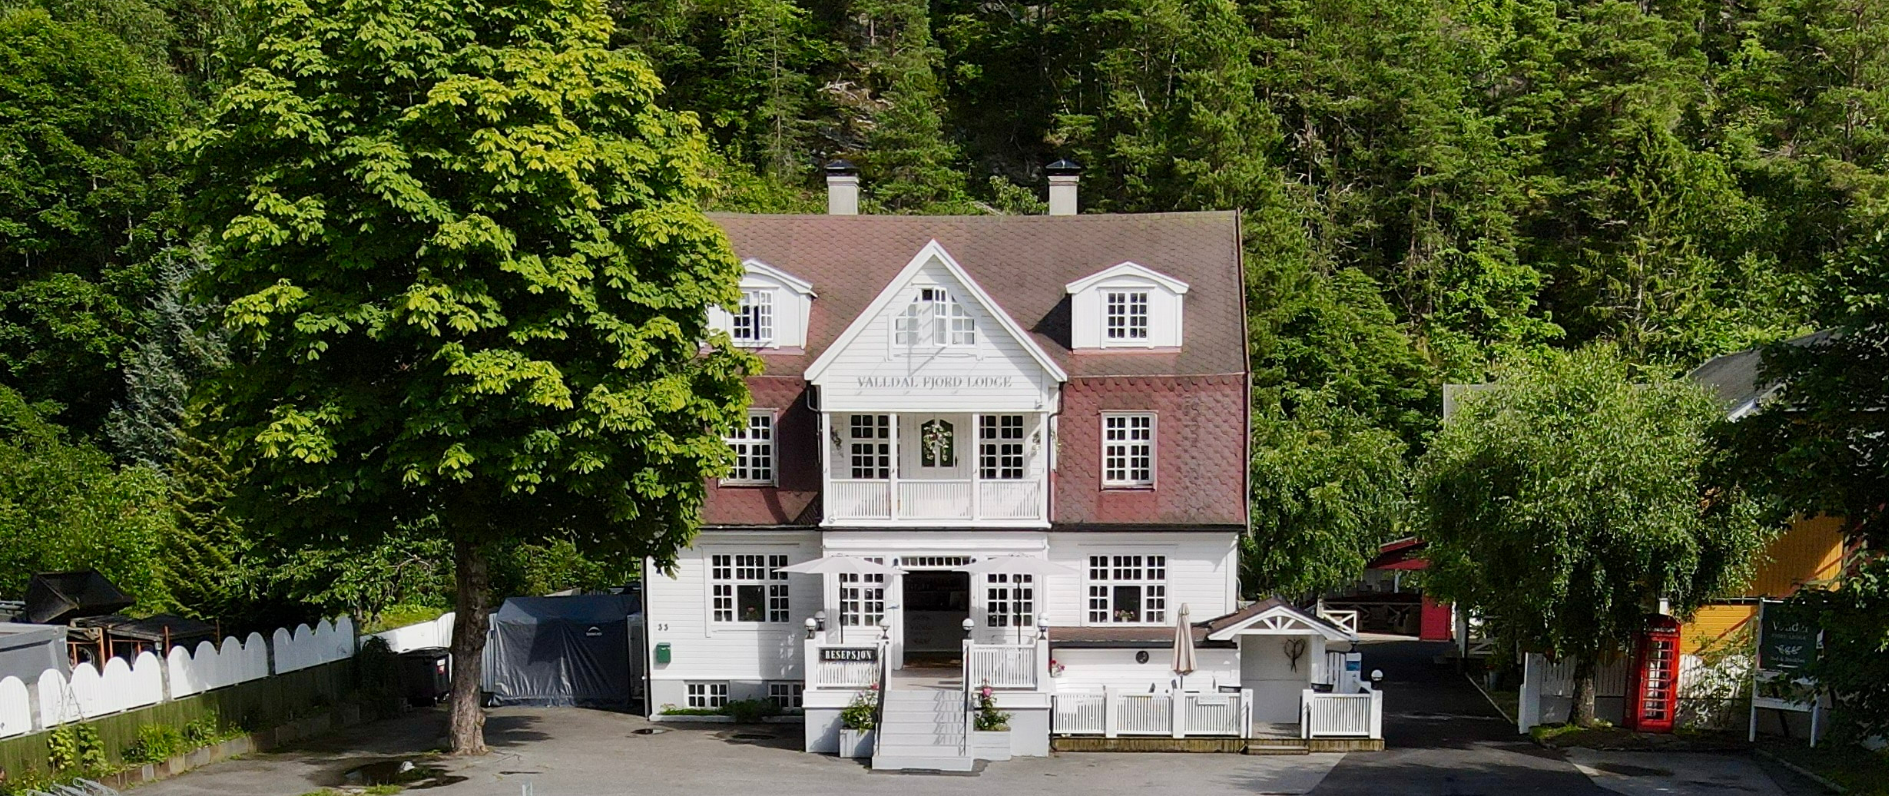 Valldal Fjord Lodge